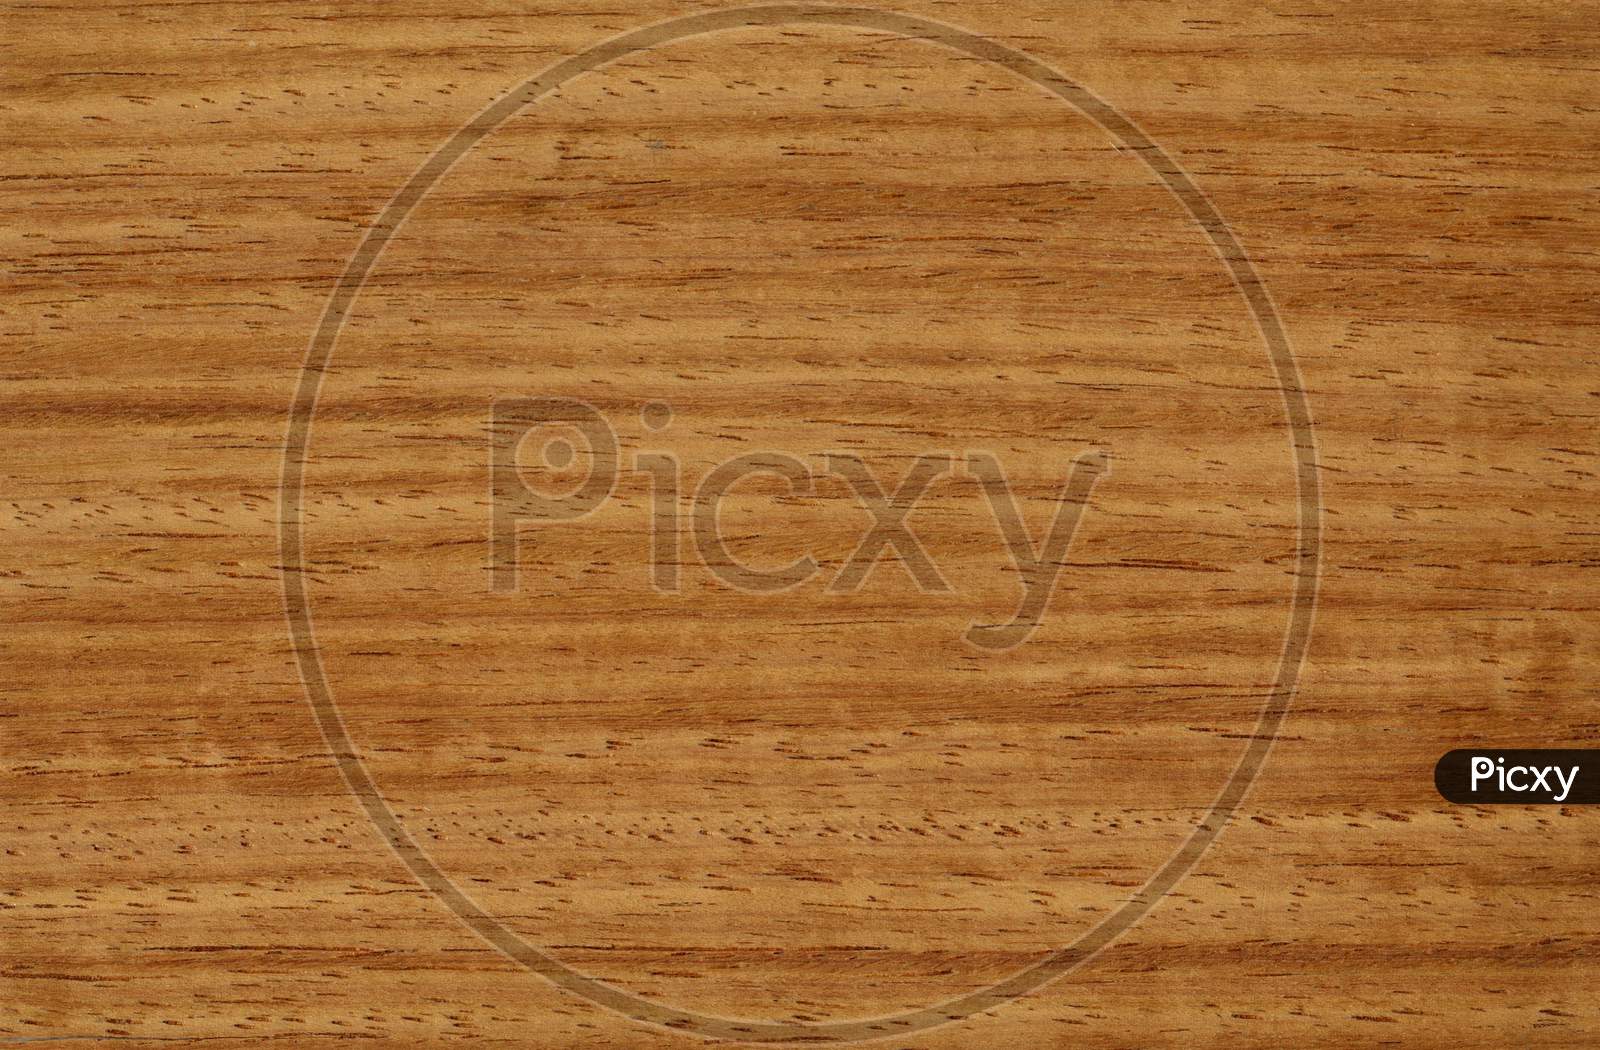 Natural Burma Teak Wood Veneer Surface For Interior And Exterior Manufacturers Use.